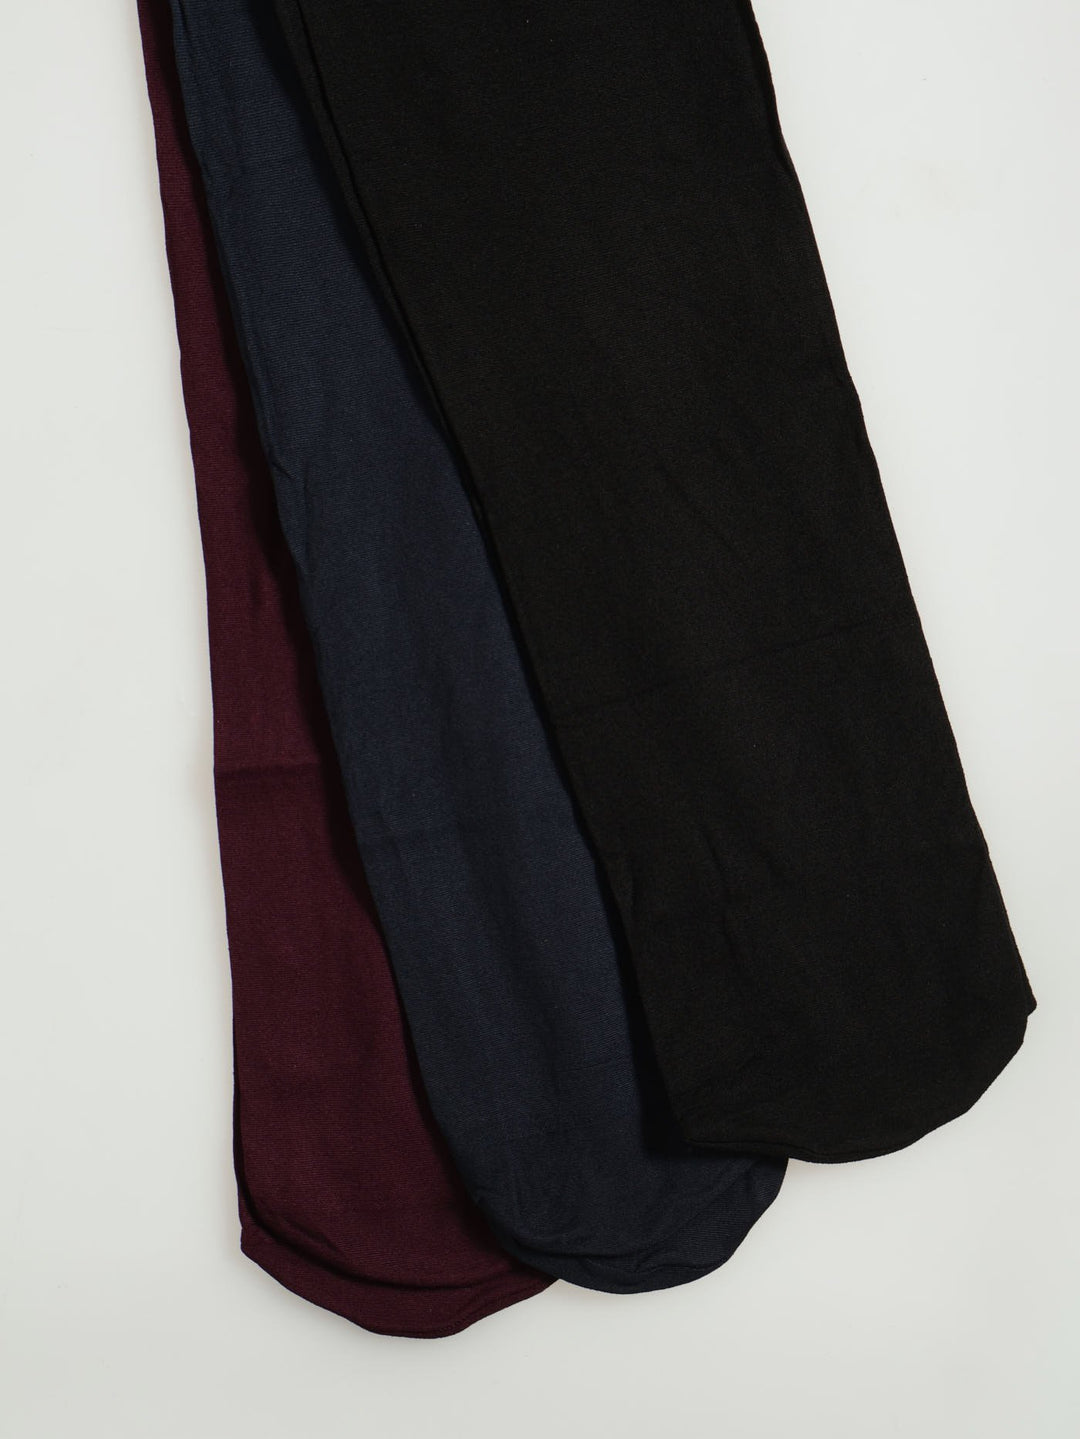 3 Pack Opaque Stockings - Navy/Burgundy/Black